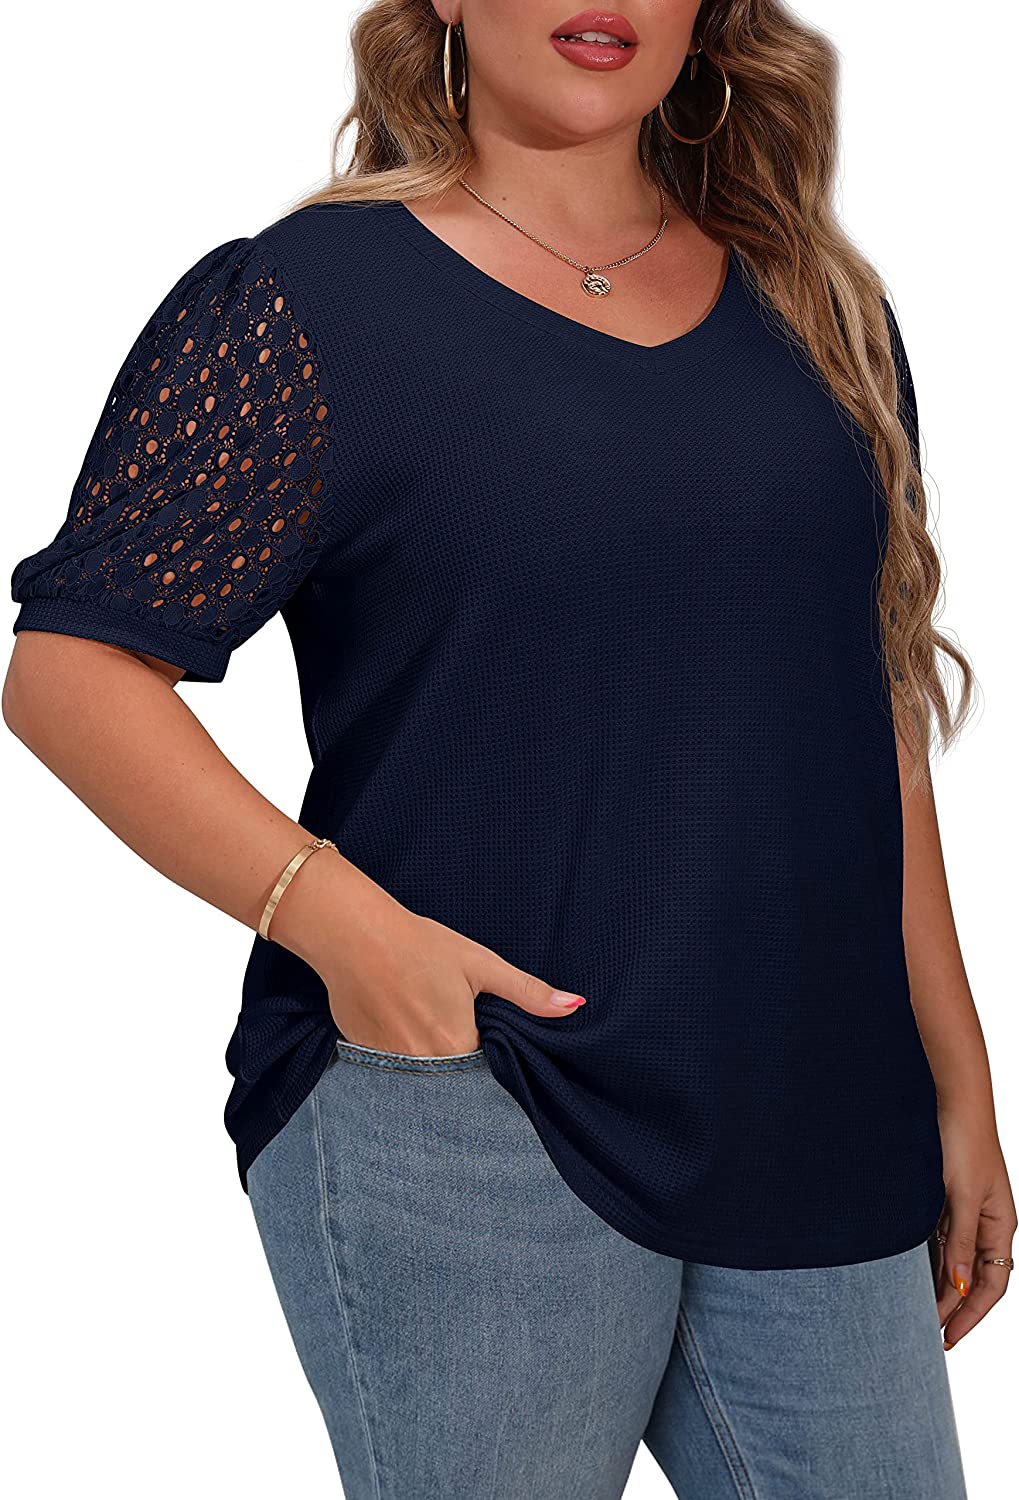 OLRIK Plus Size Tops for Women Summer Blouse Waffle Knit Short Lace Sleeve  Shirt